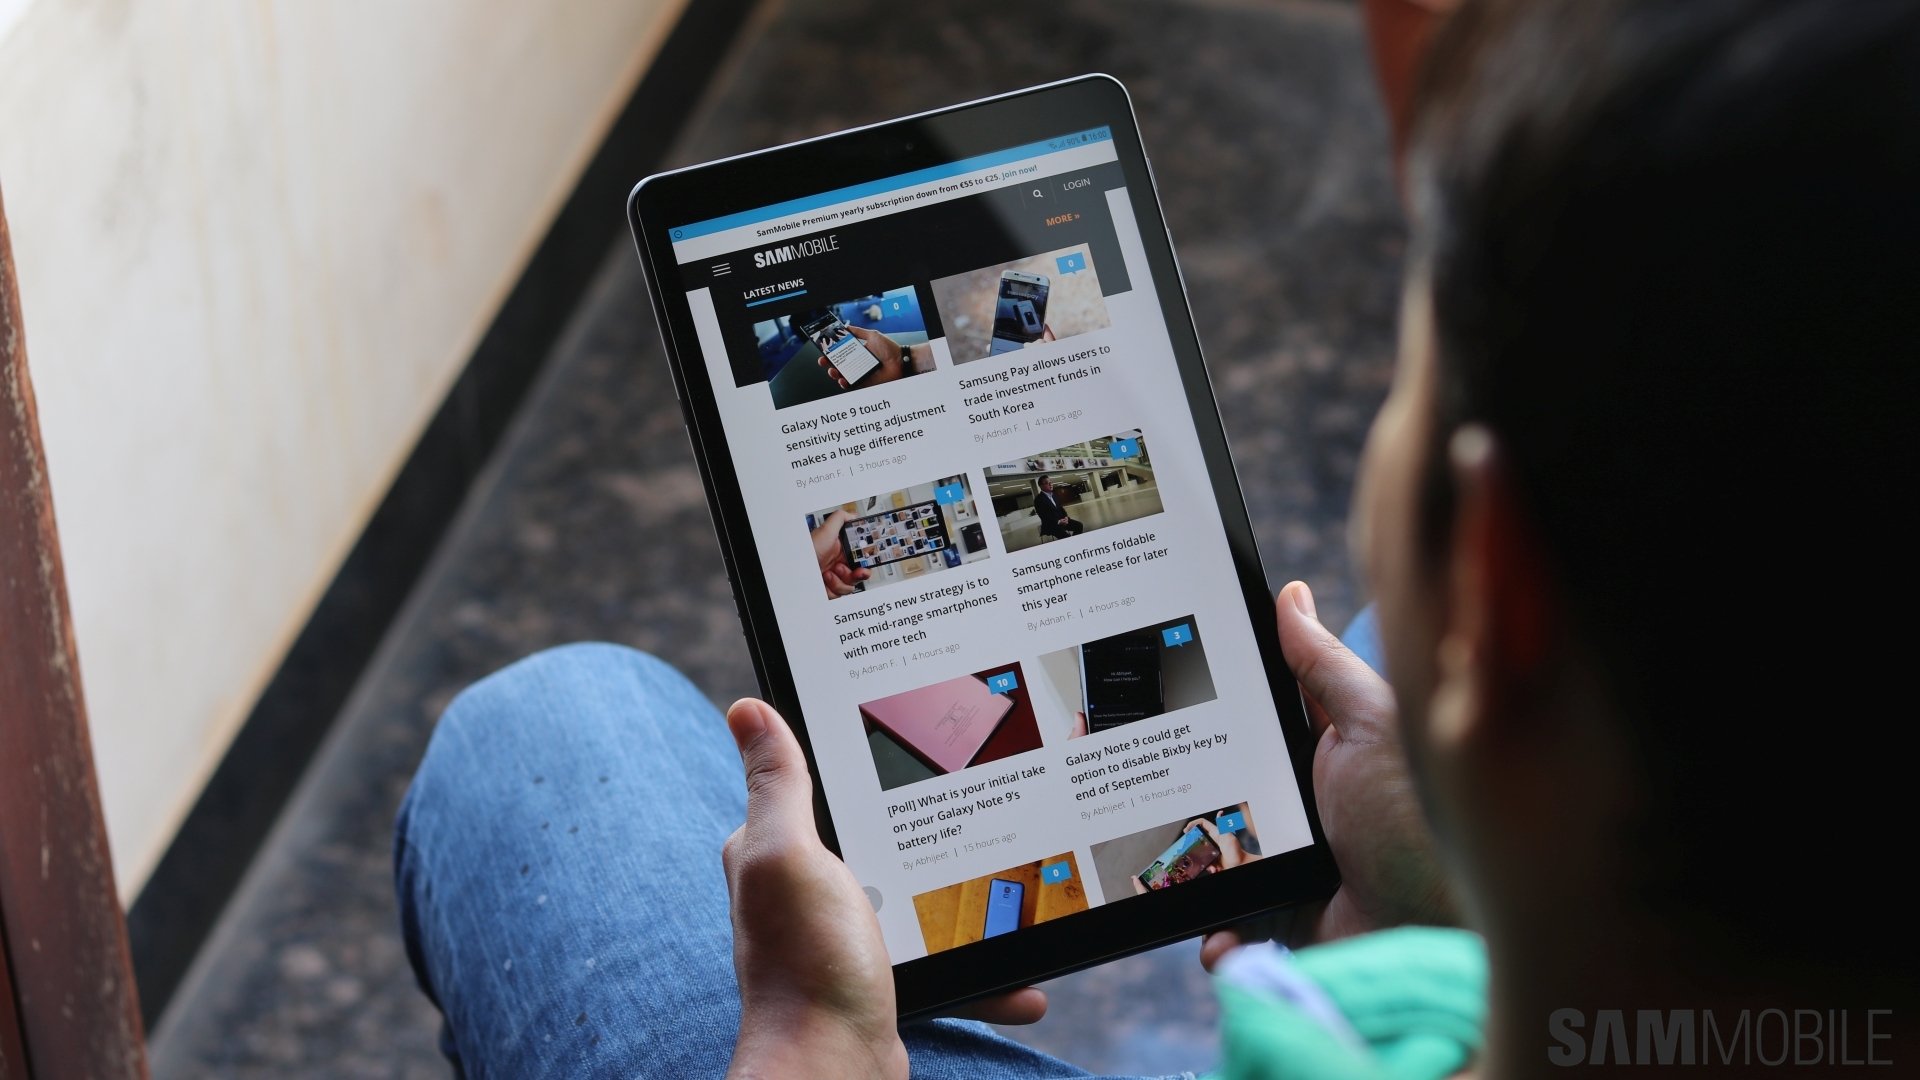 token Bengelen Onmogelijk Samsung Galaxy Tab A 10.5 review: An unassuming mid-range tablet - SamMobile